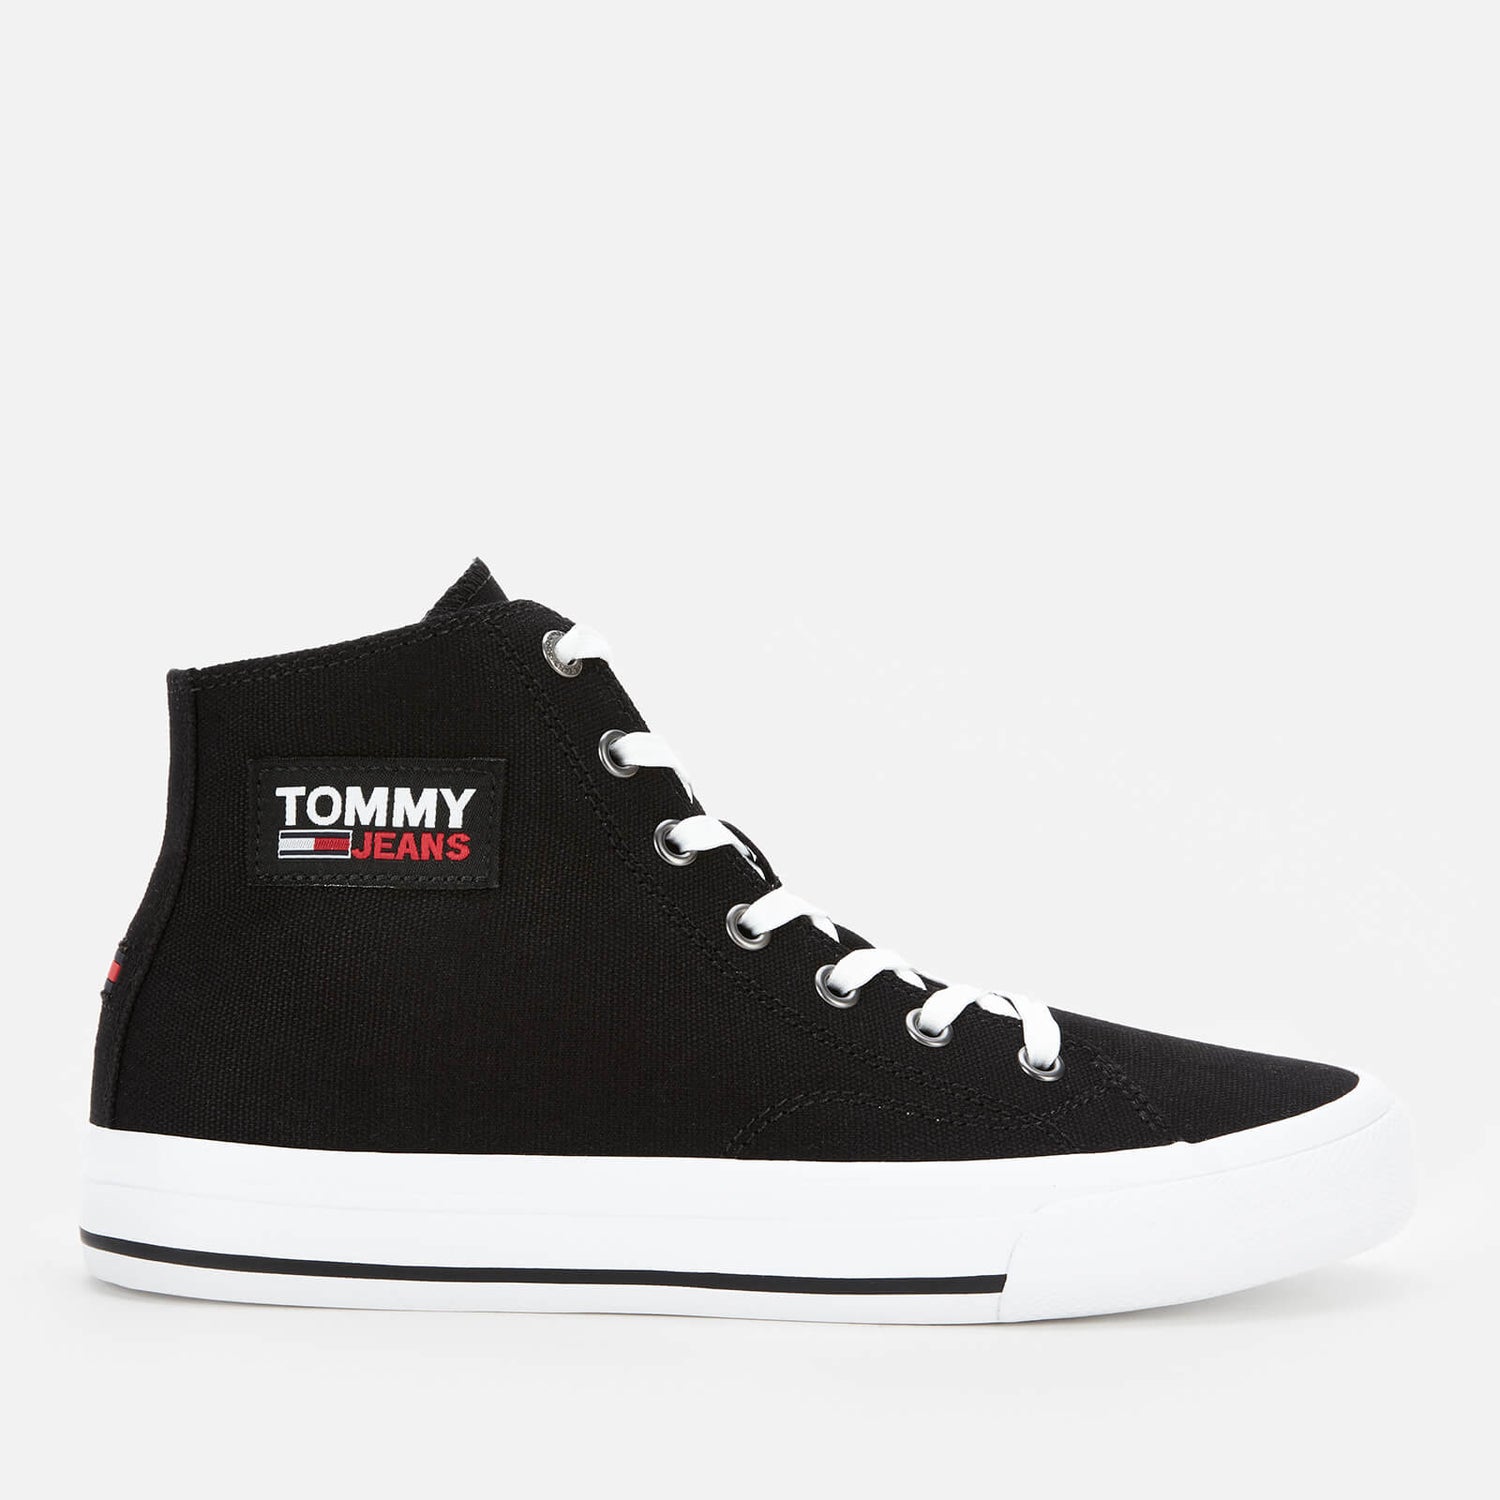 Tommy Jeans Women's Canvas Hi-Top Trainers - Black